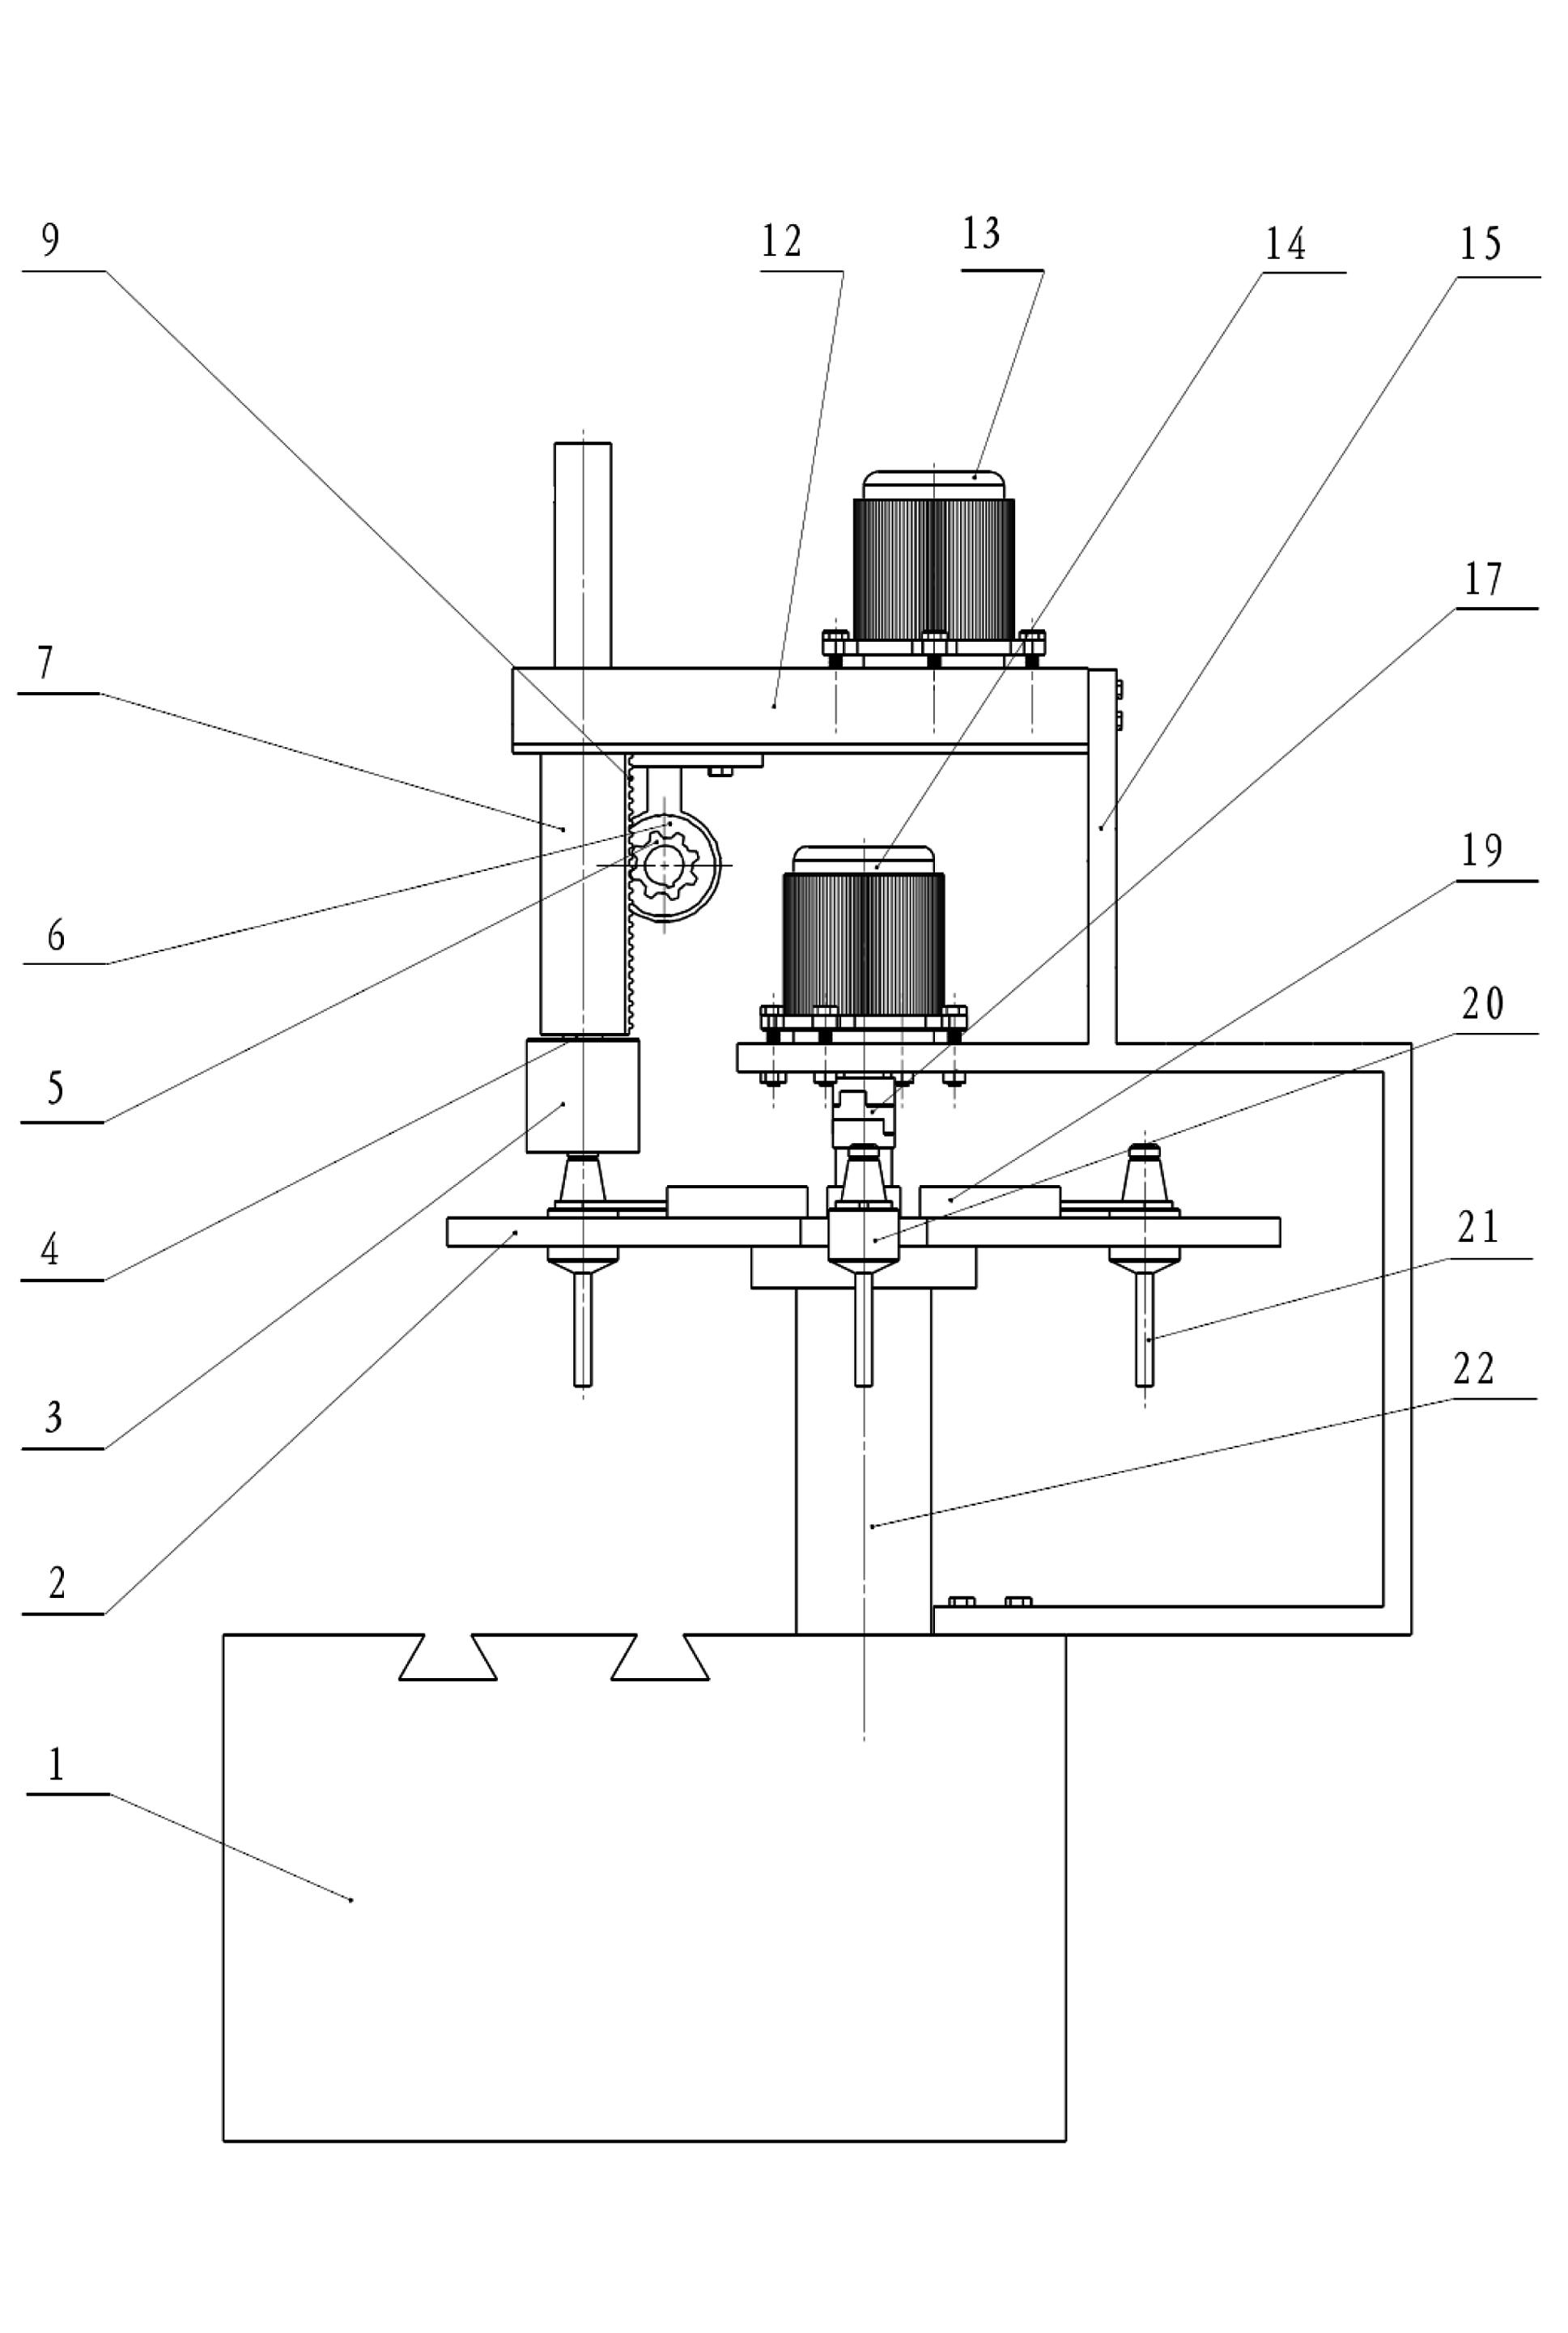 Multi-head numerical control drilling machine